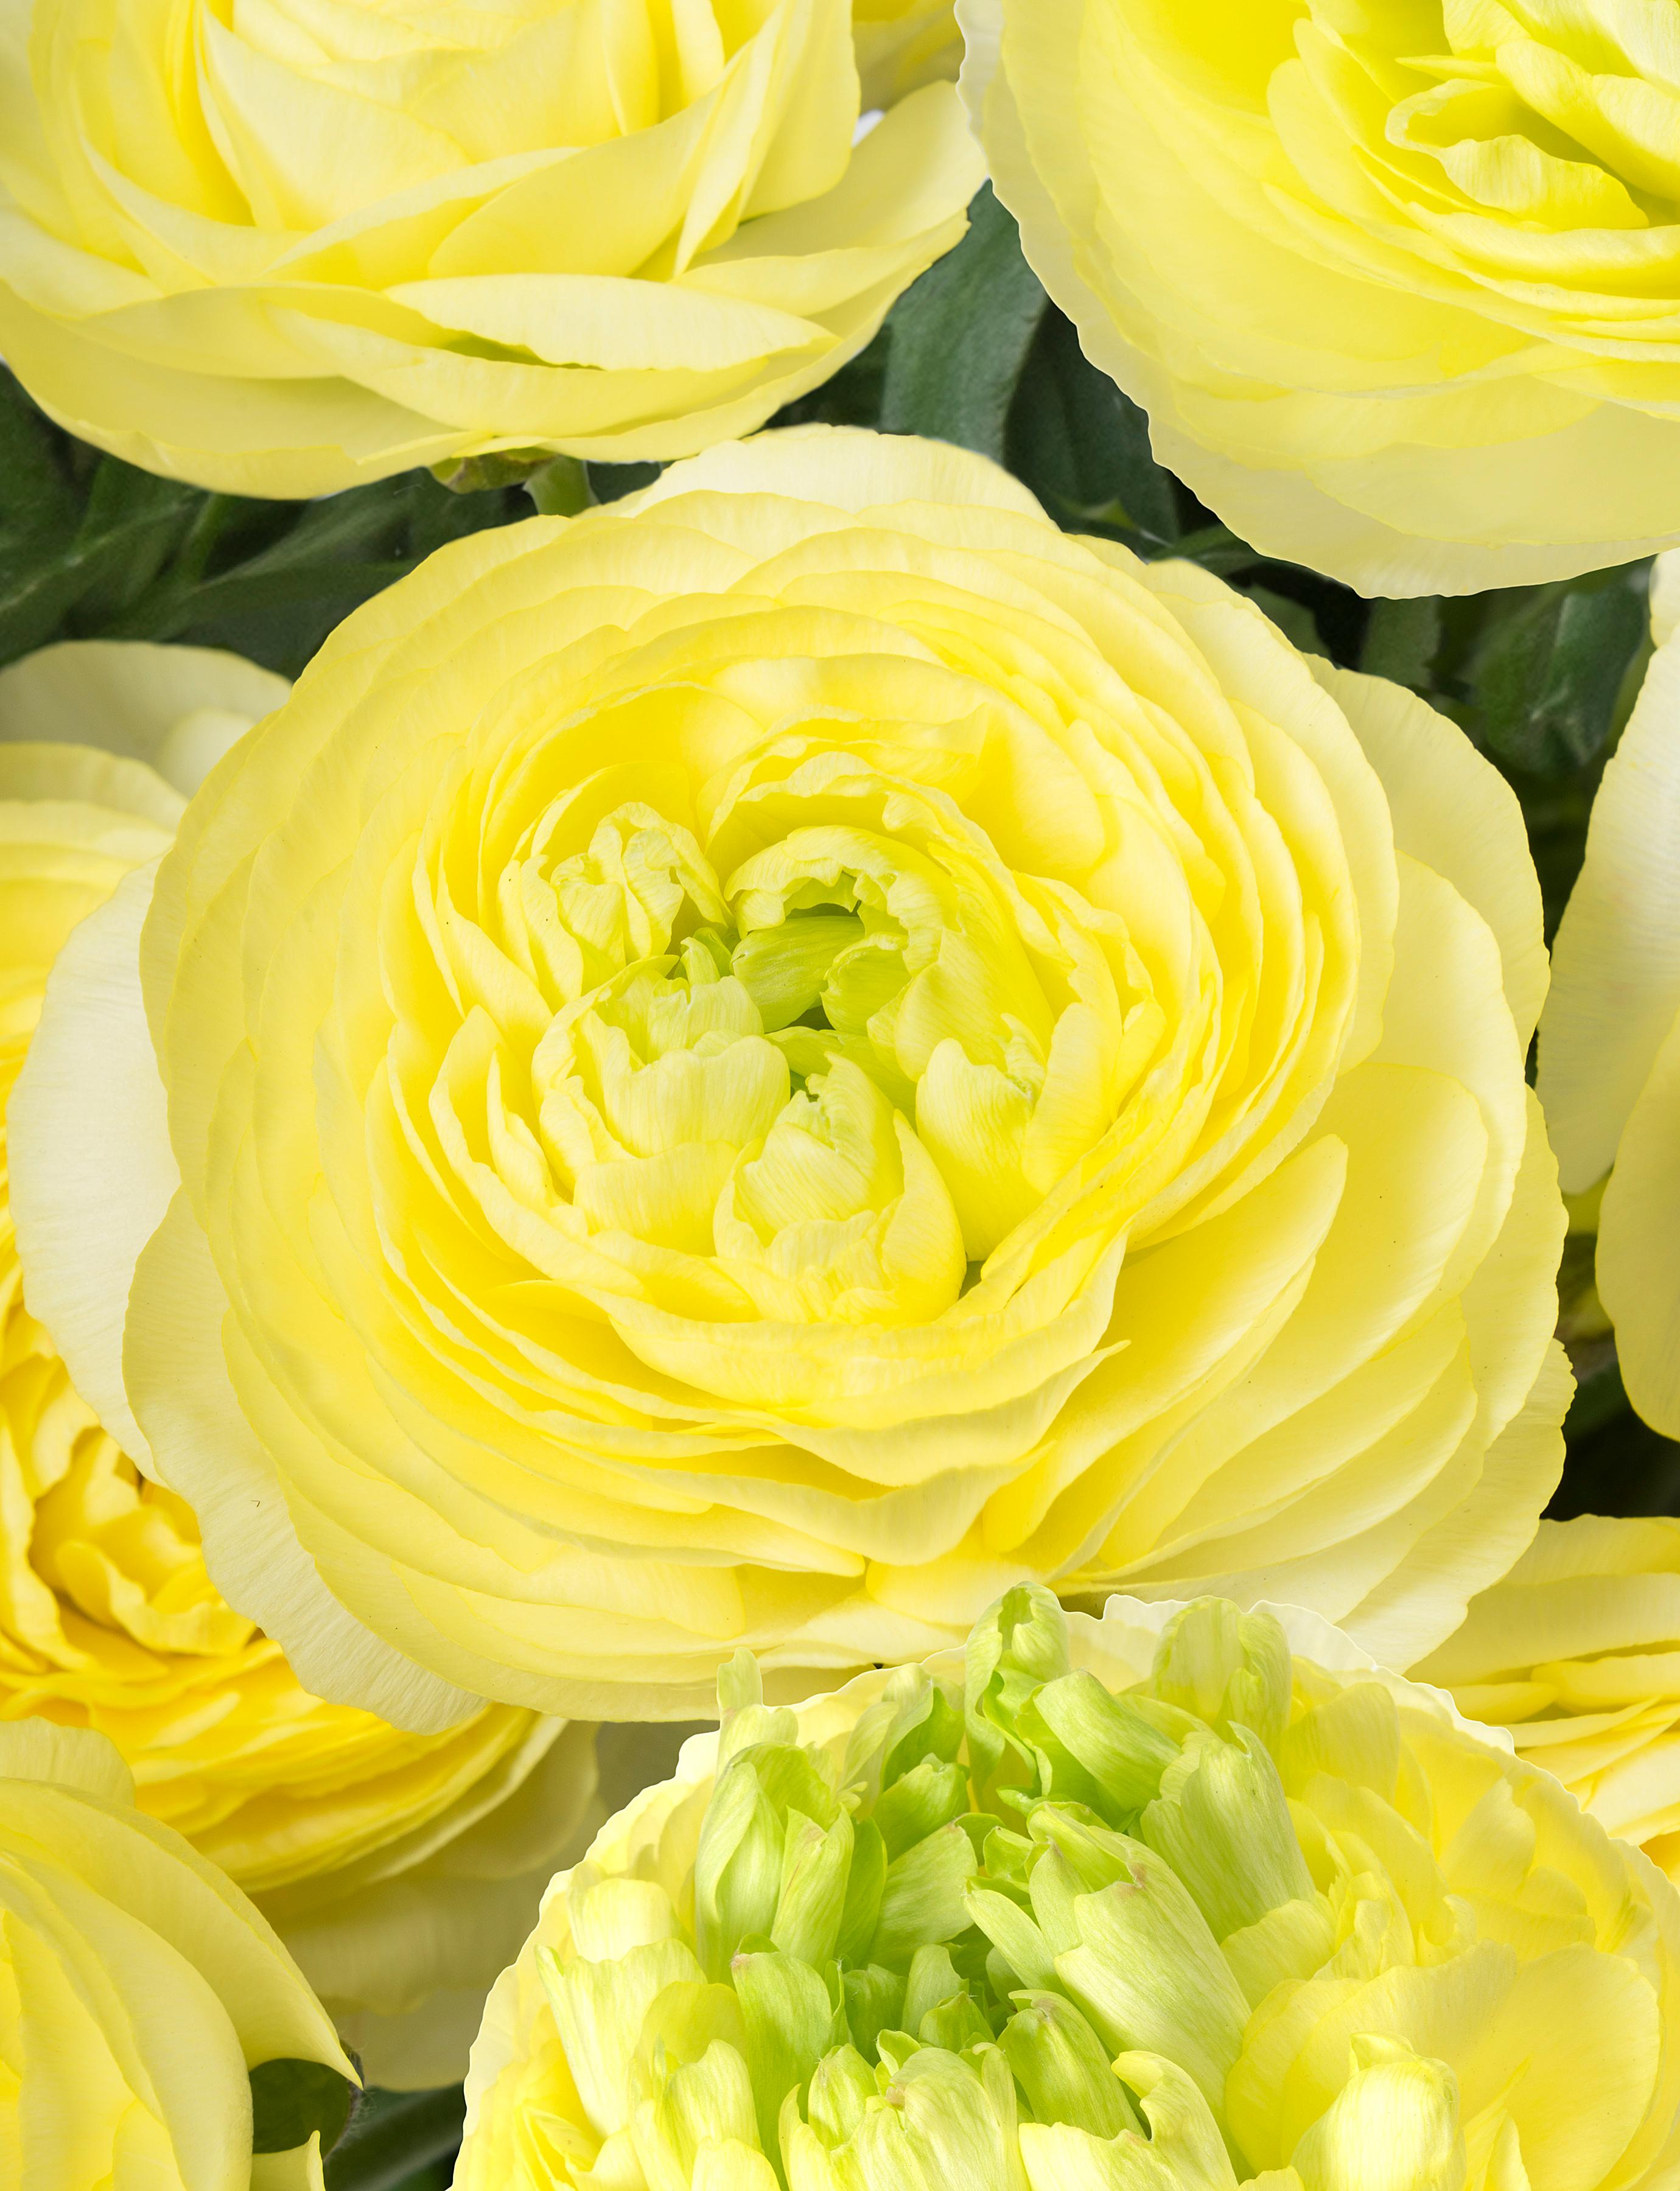 Ranunculus Romance 'Quimper' - from Leo Berbee Bulb Company